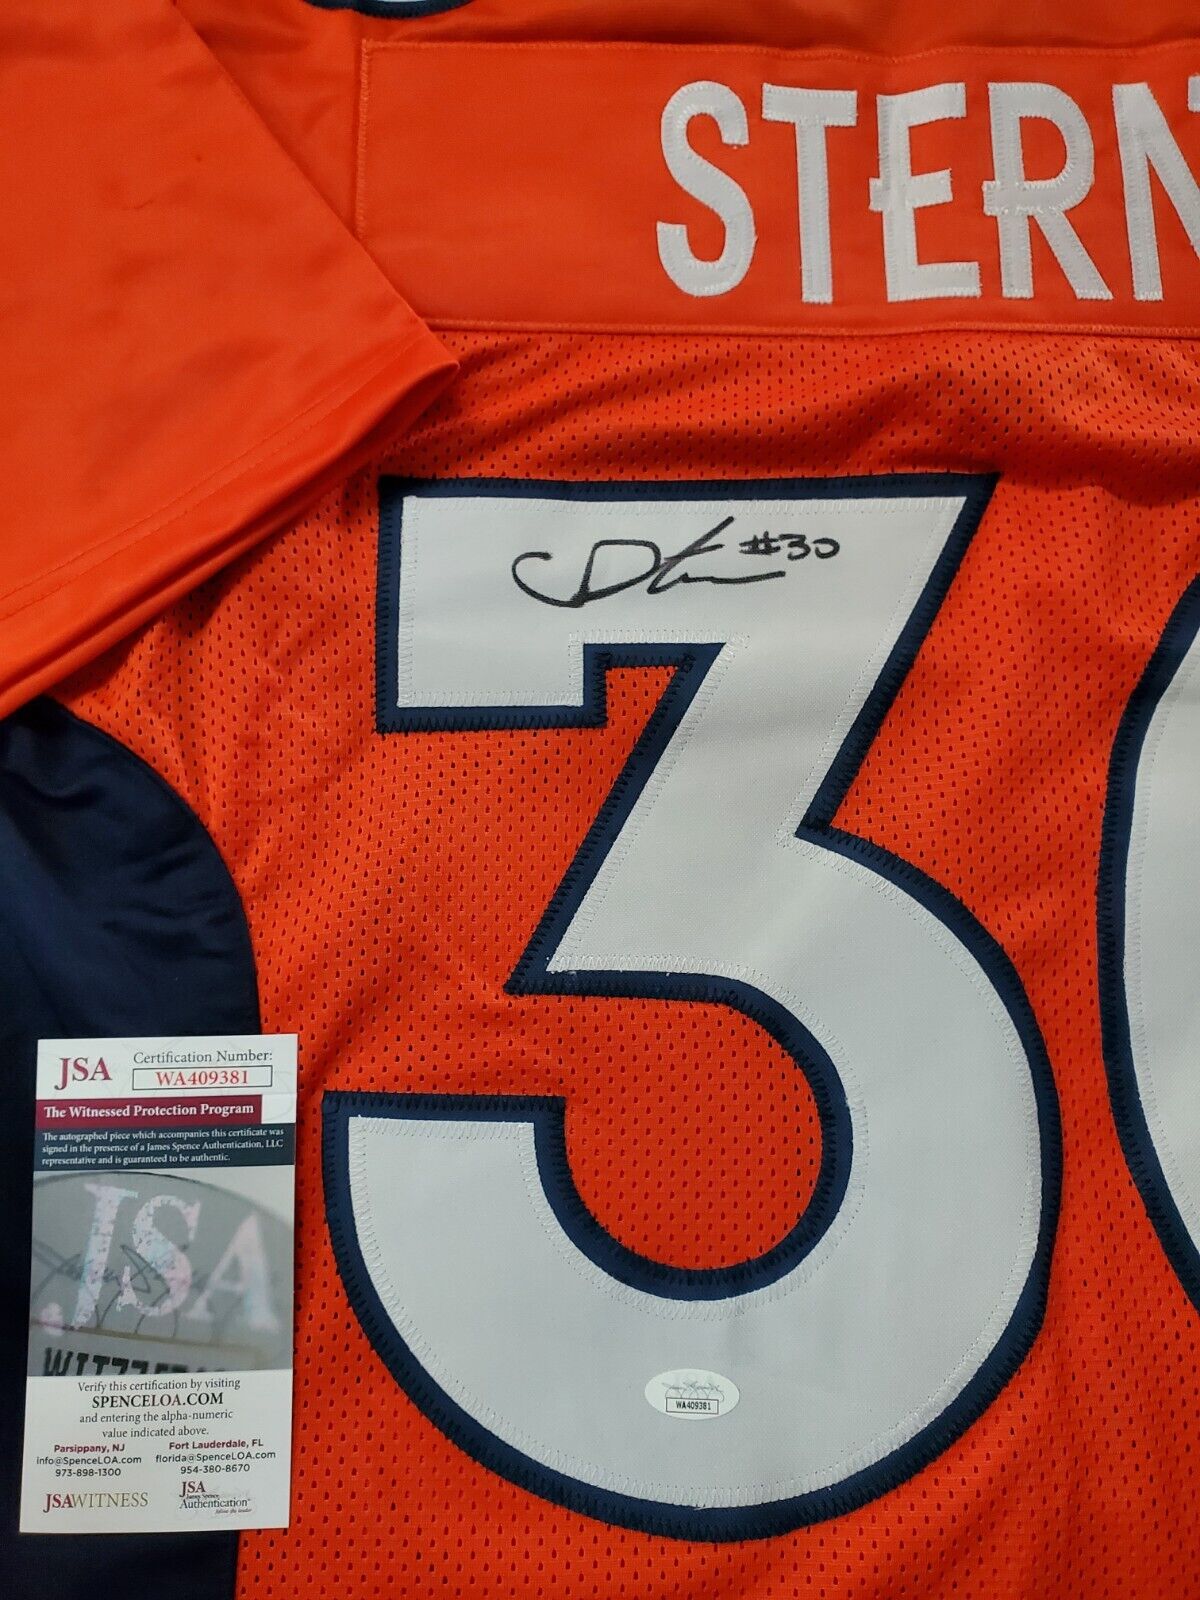 MVP Authentics Denver Broncos Caden Sterns Autographed Signed Jersey Jsa  Coa 90 sports jersey framing , jersey framing